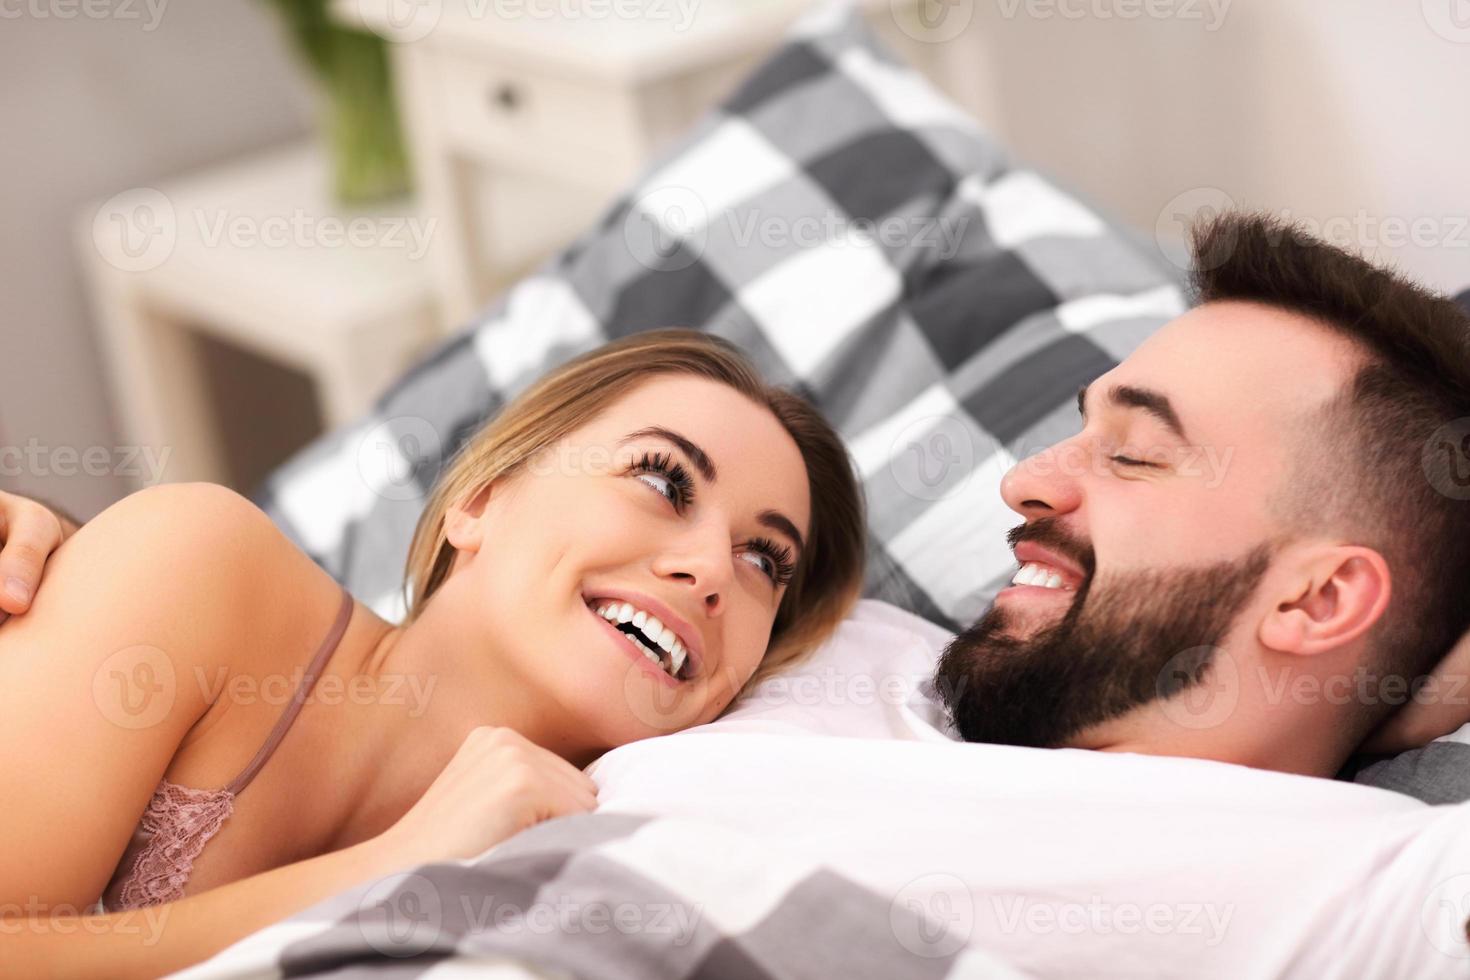 vuxen attraktiv par i säng foto